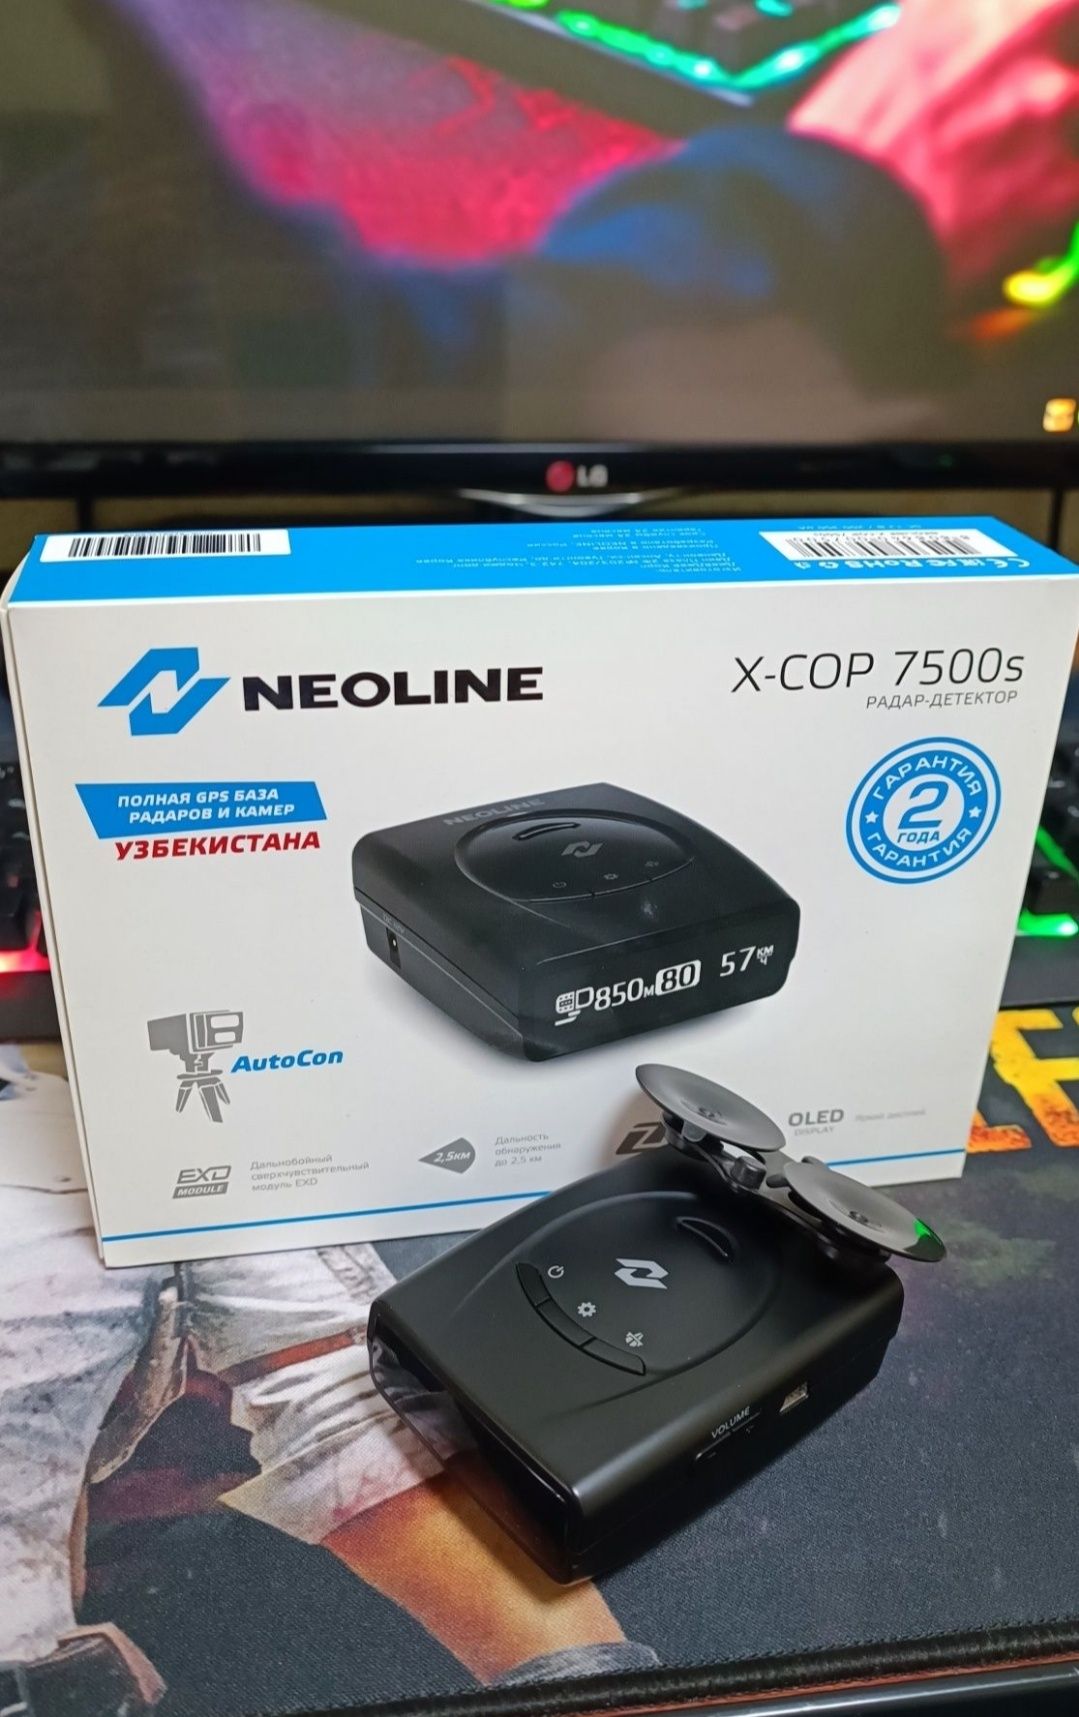 Neoline x-cop 7500s